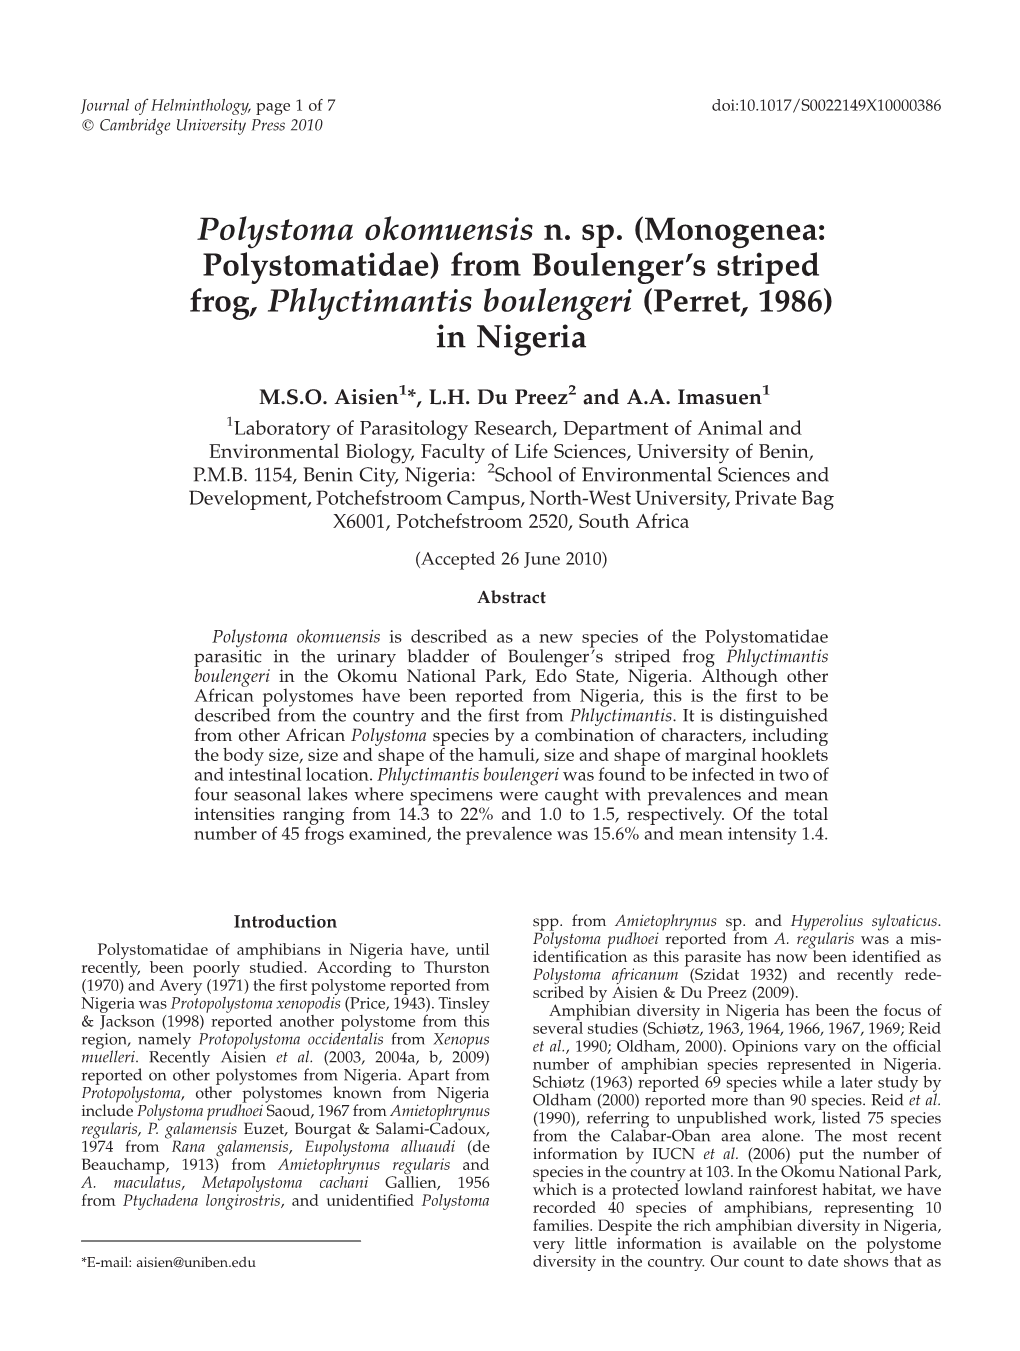 Polystoma Okomuensis N. Sp. (Monogenea: Polystomatidae) from Boulenger’S Striped Frog, Phlyctimantis Boulengeri (Perret, 1986) in Nigeria